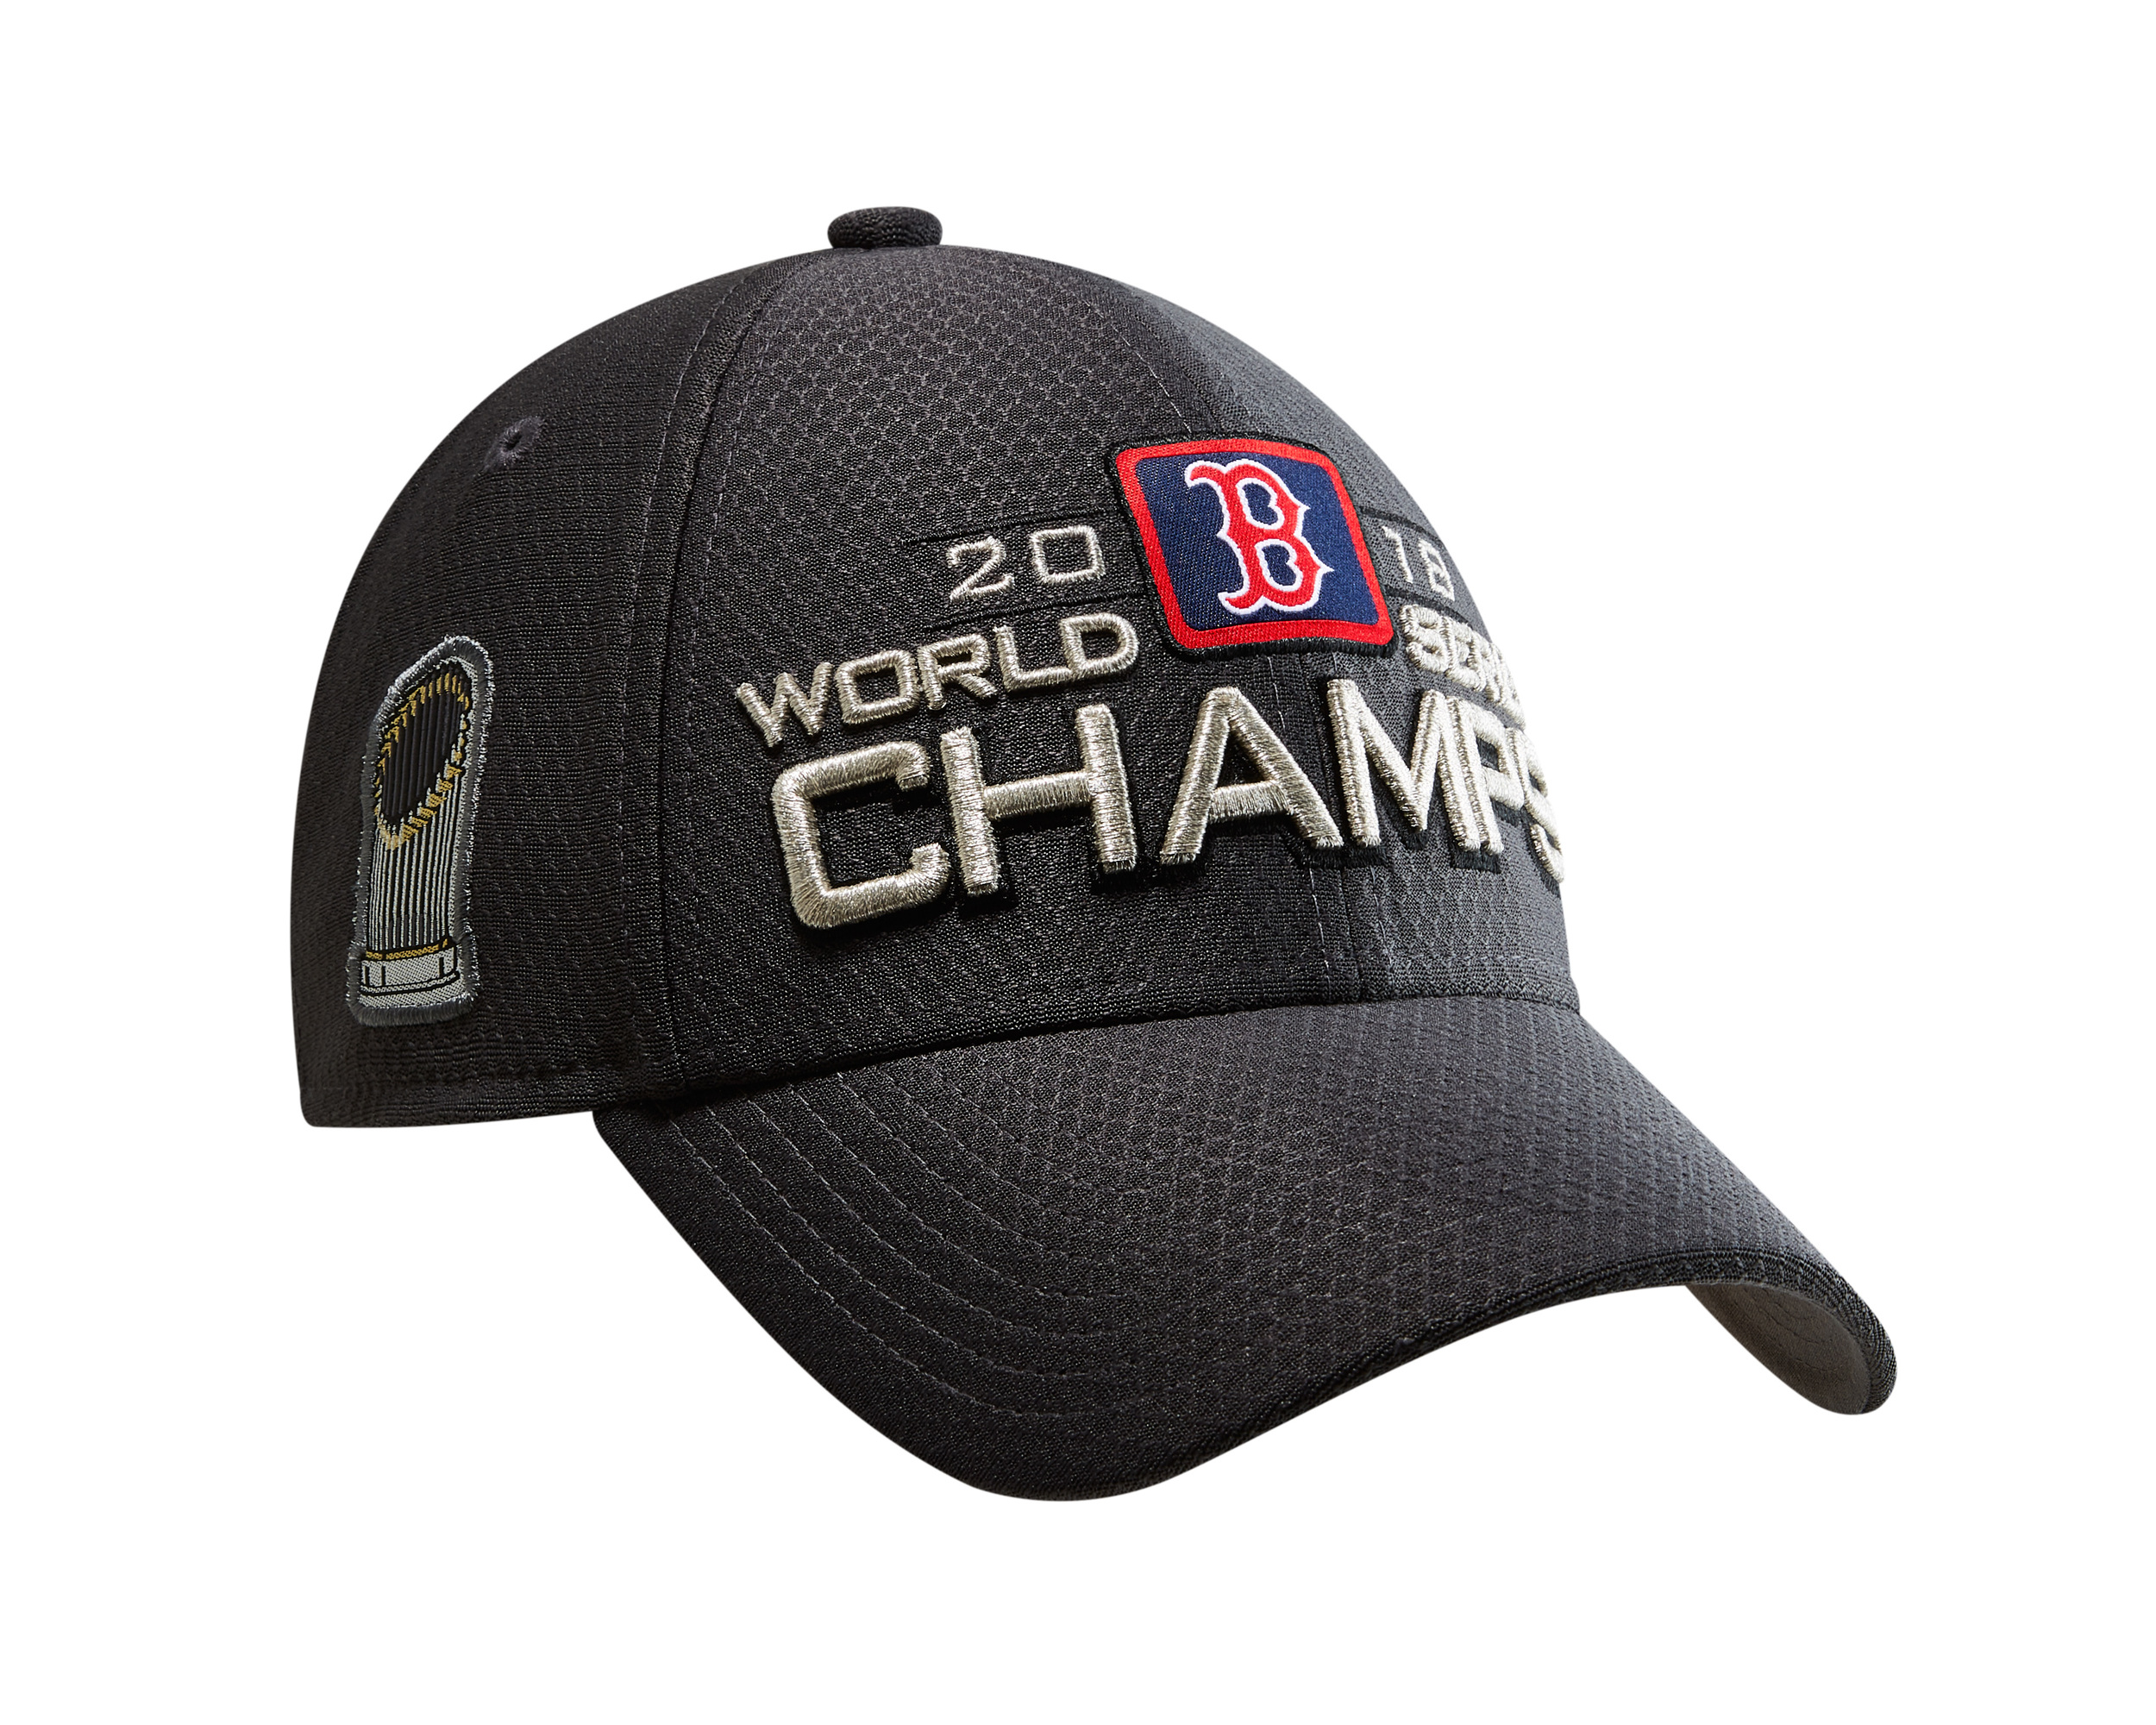 2018 world series champions hat